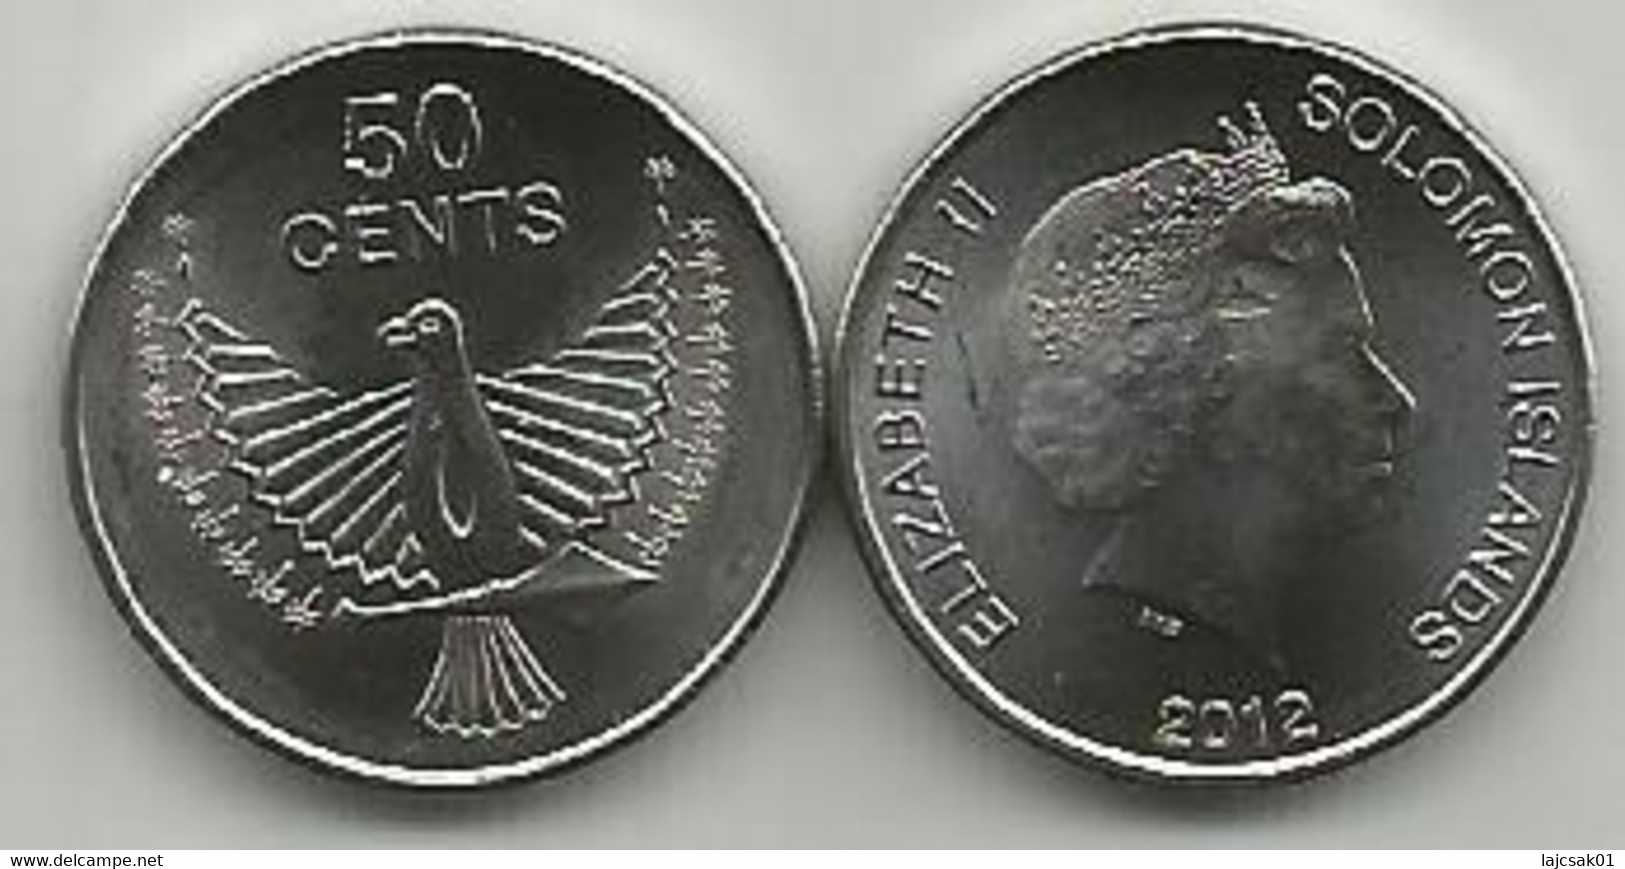 Solomon Islands 50 Cents 2012. High Grade - Solomoneilanden